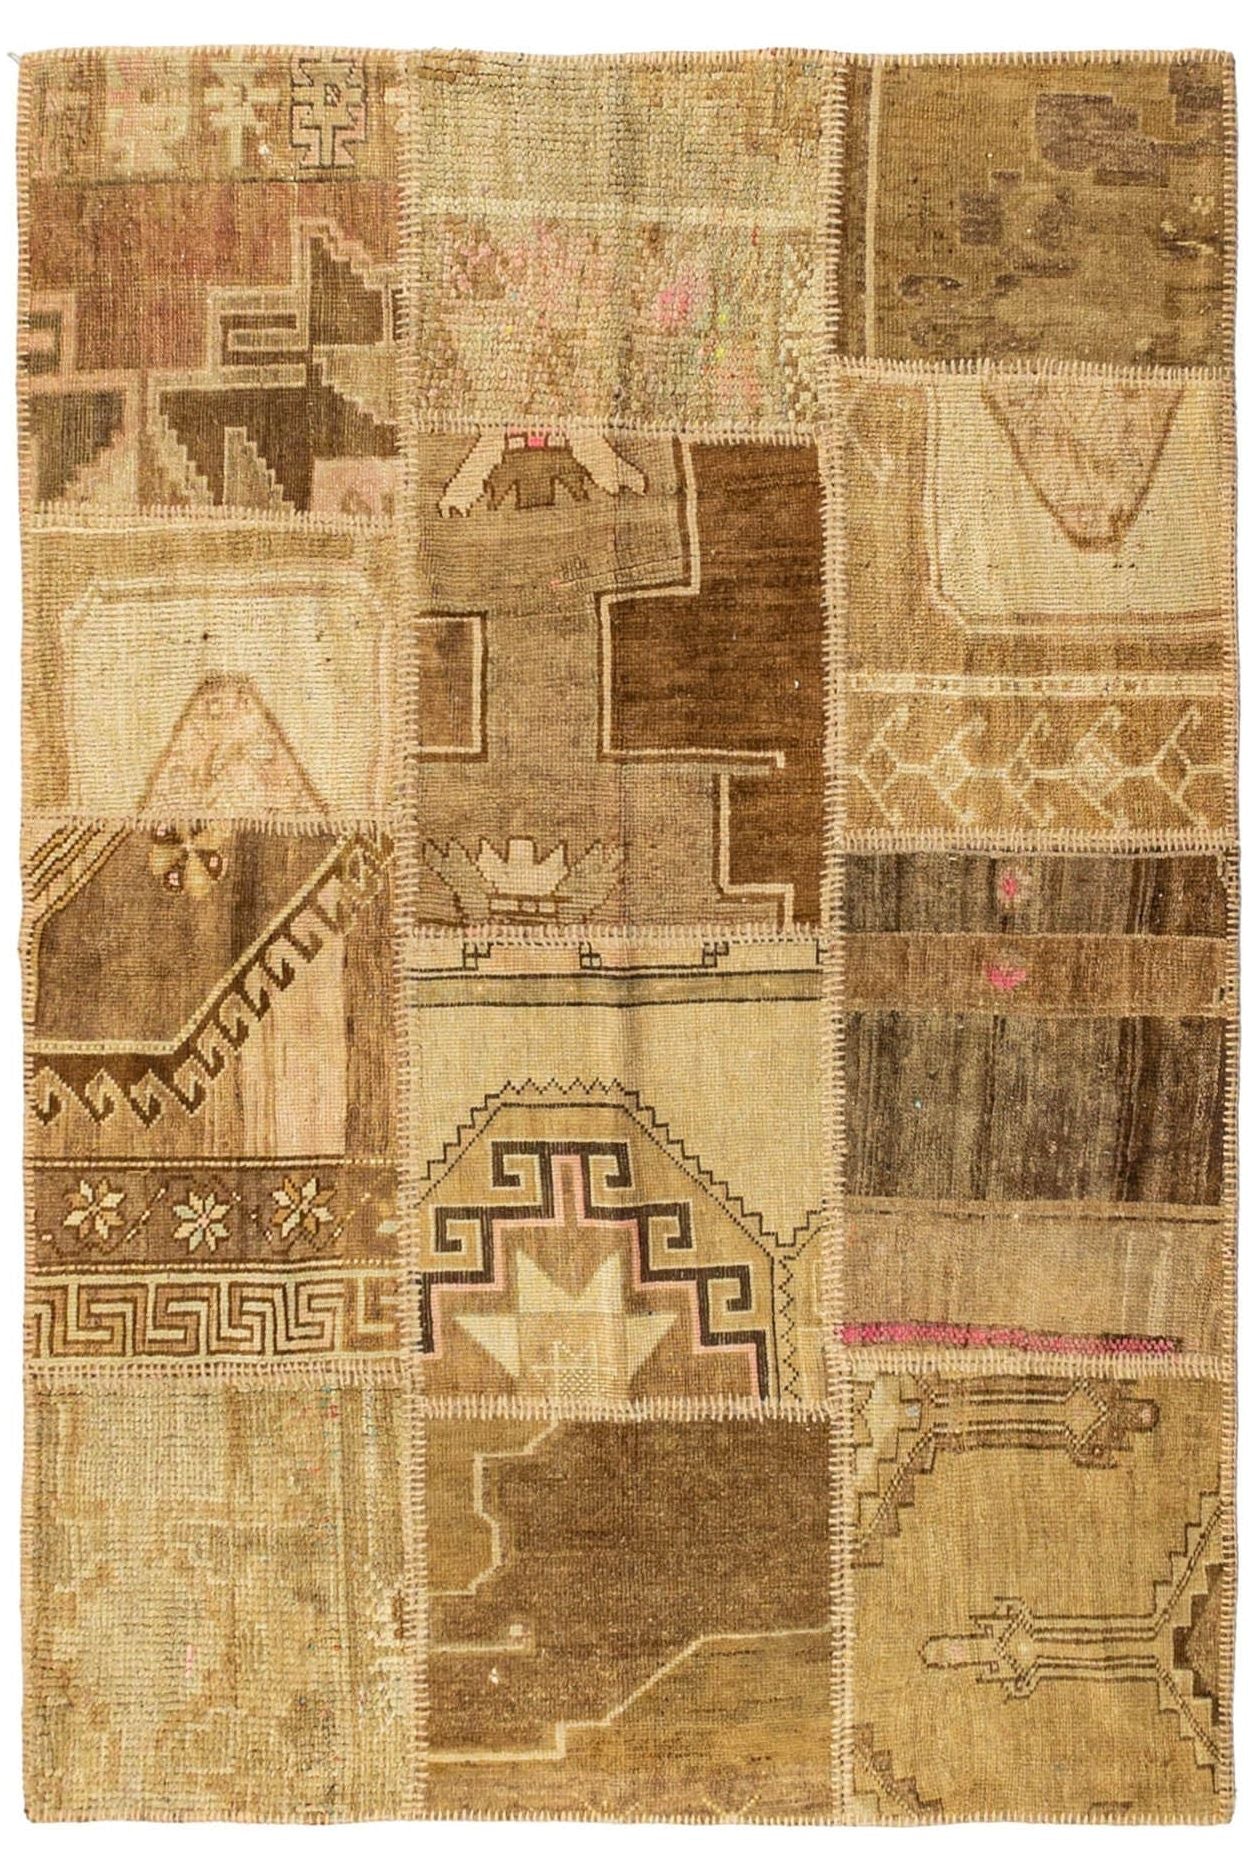 #Turkish_Carpets_Rugs# #Modern_Carpets# #Abrash_Carpets#Abrash-Turpa071600205-144X200